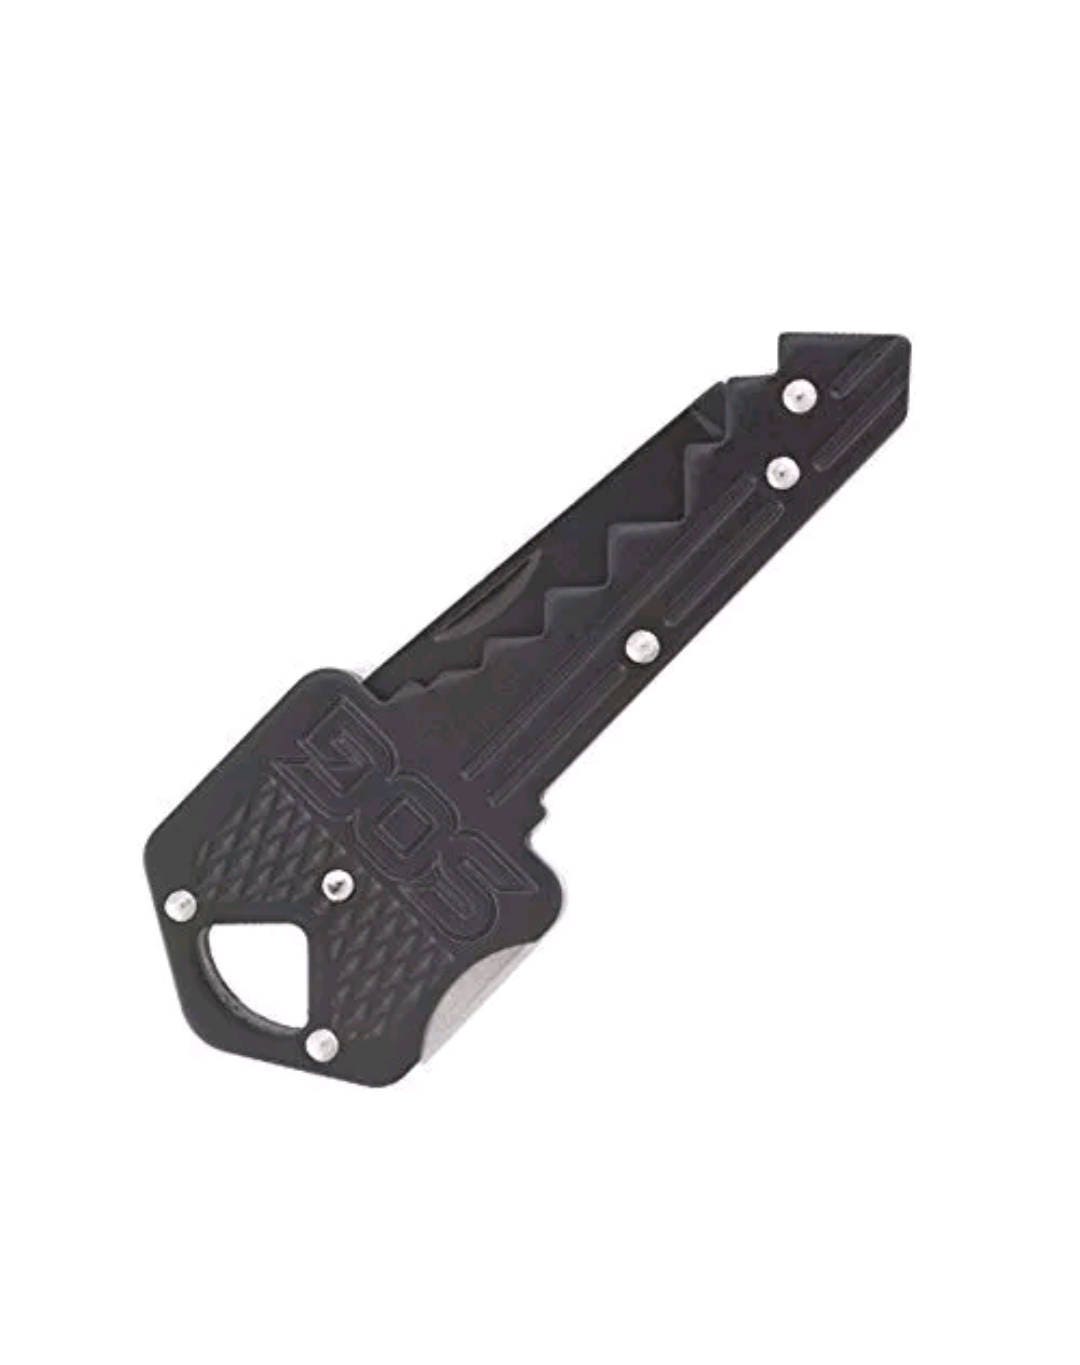 Sog Key Folding knife Key - 1.5" Blade Black Stainless steel handle Box Package Opener